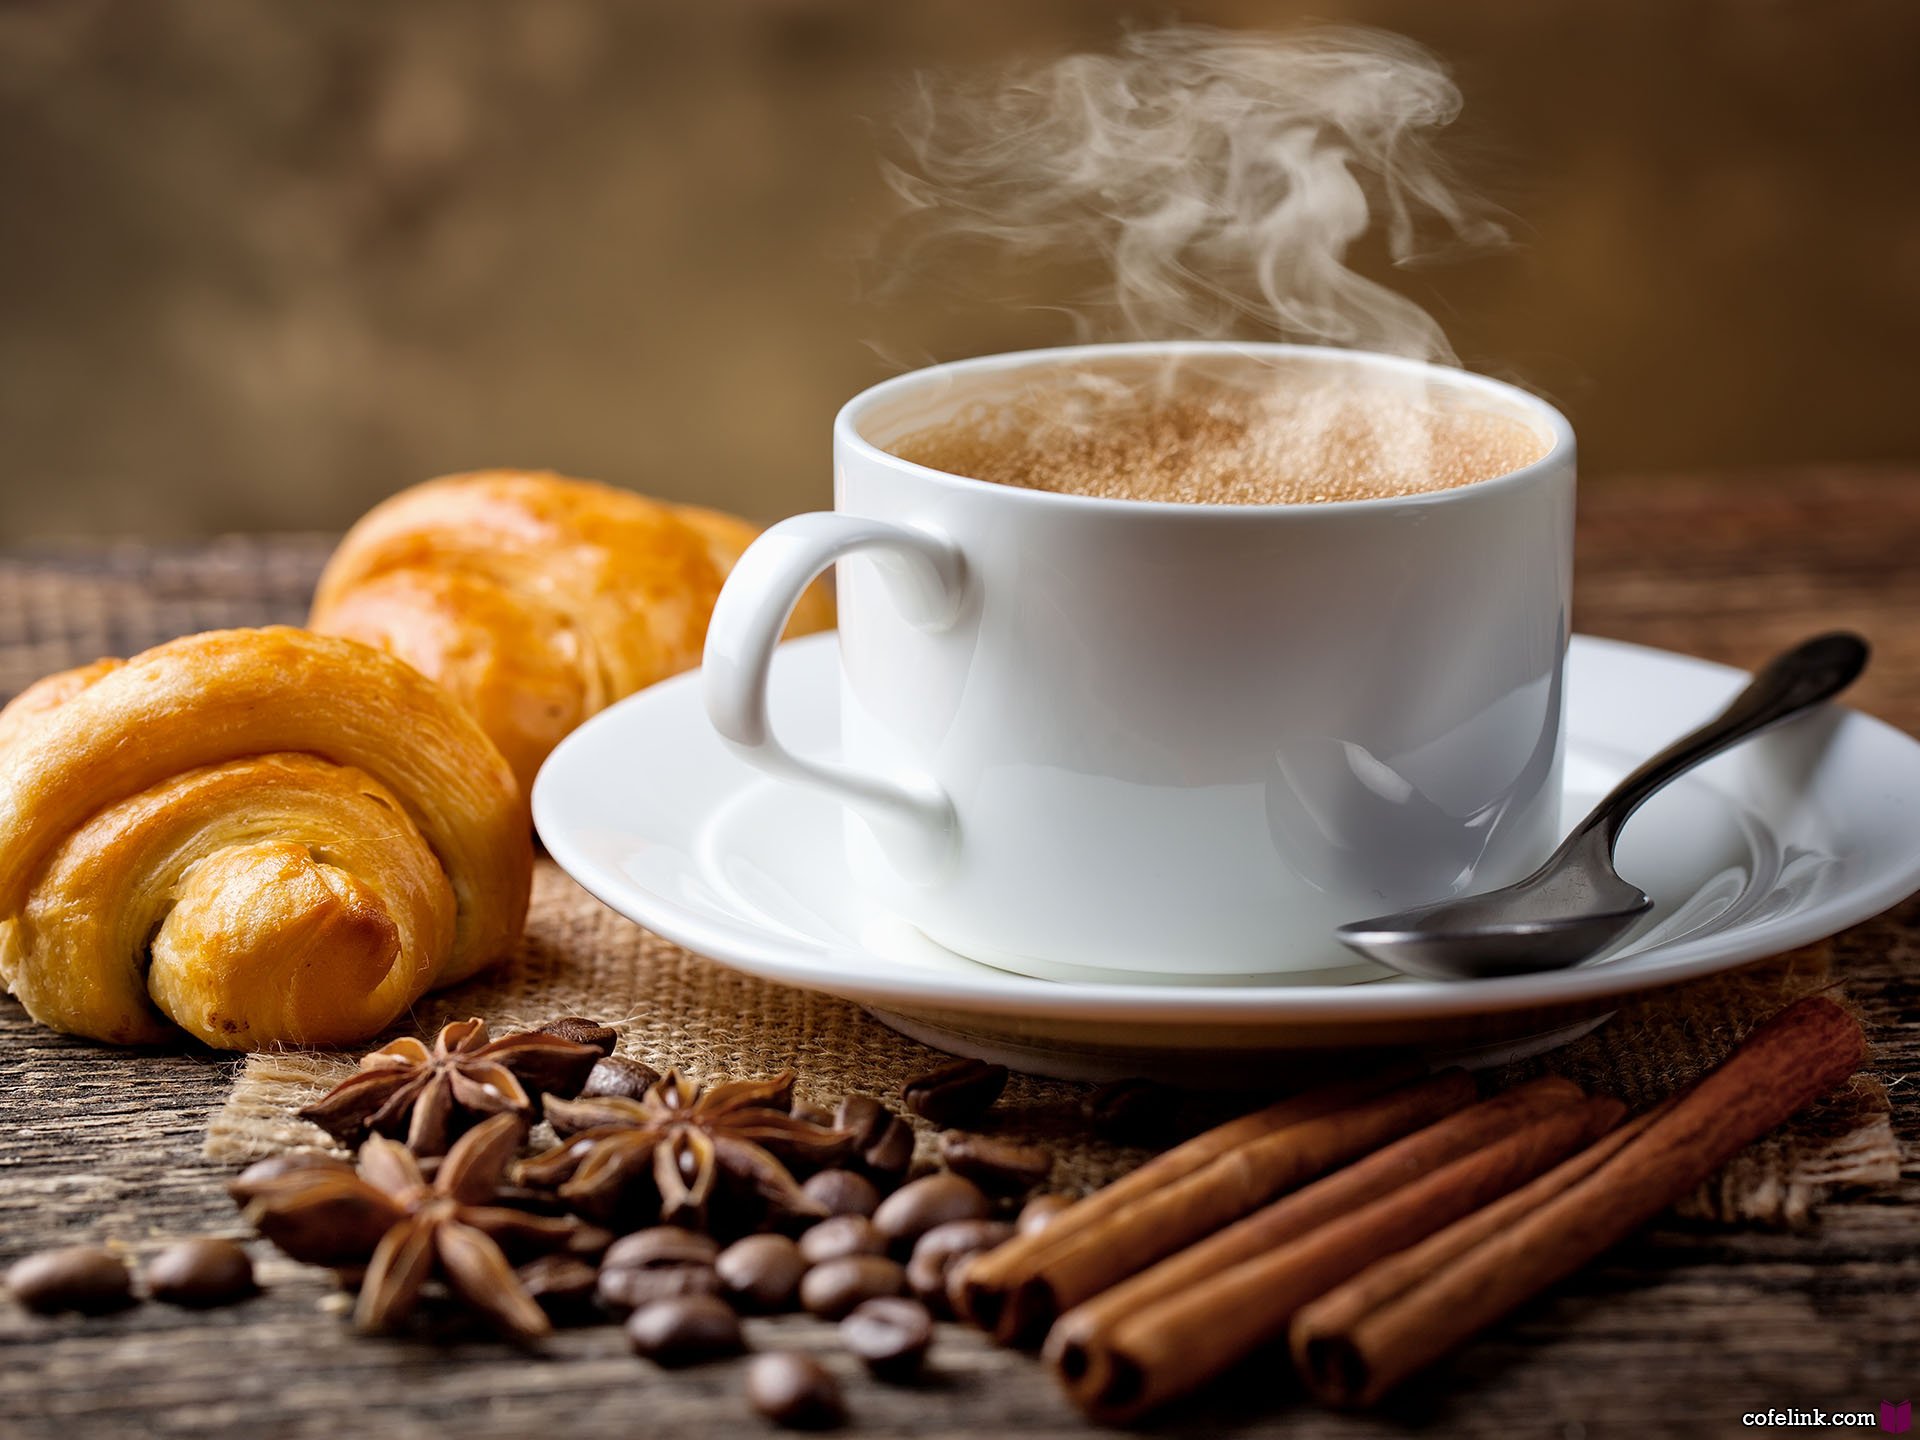 فوائد نوشیدن قهوه